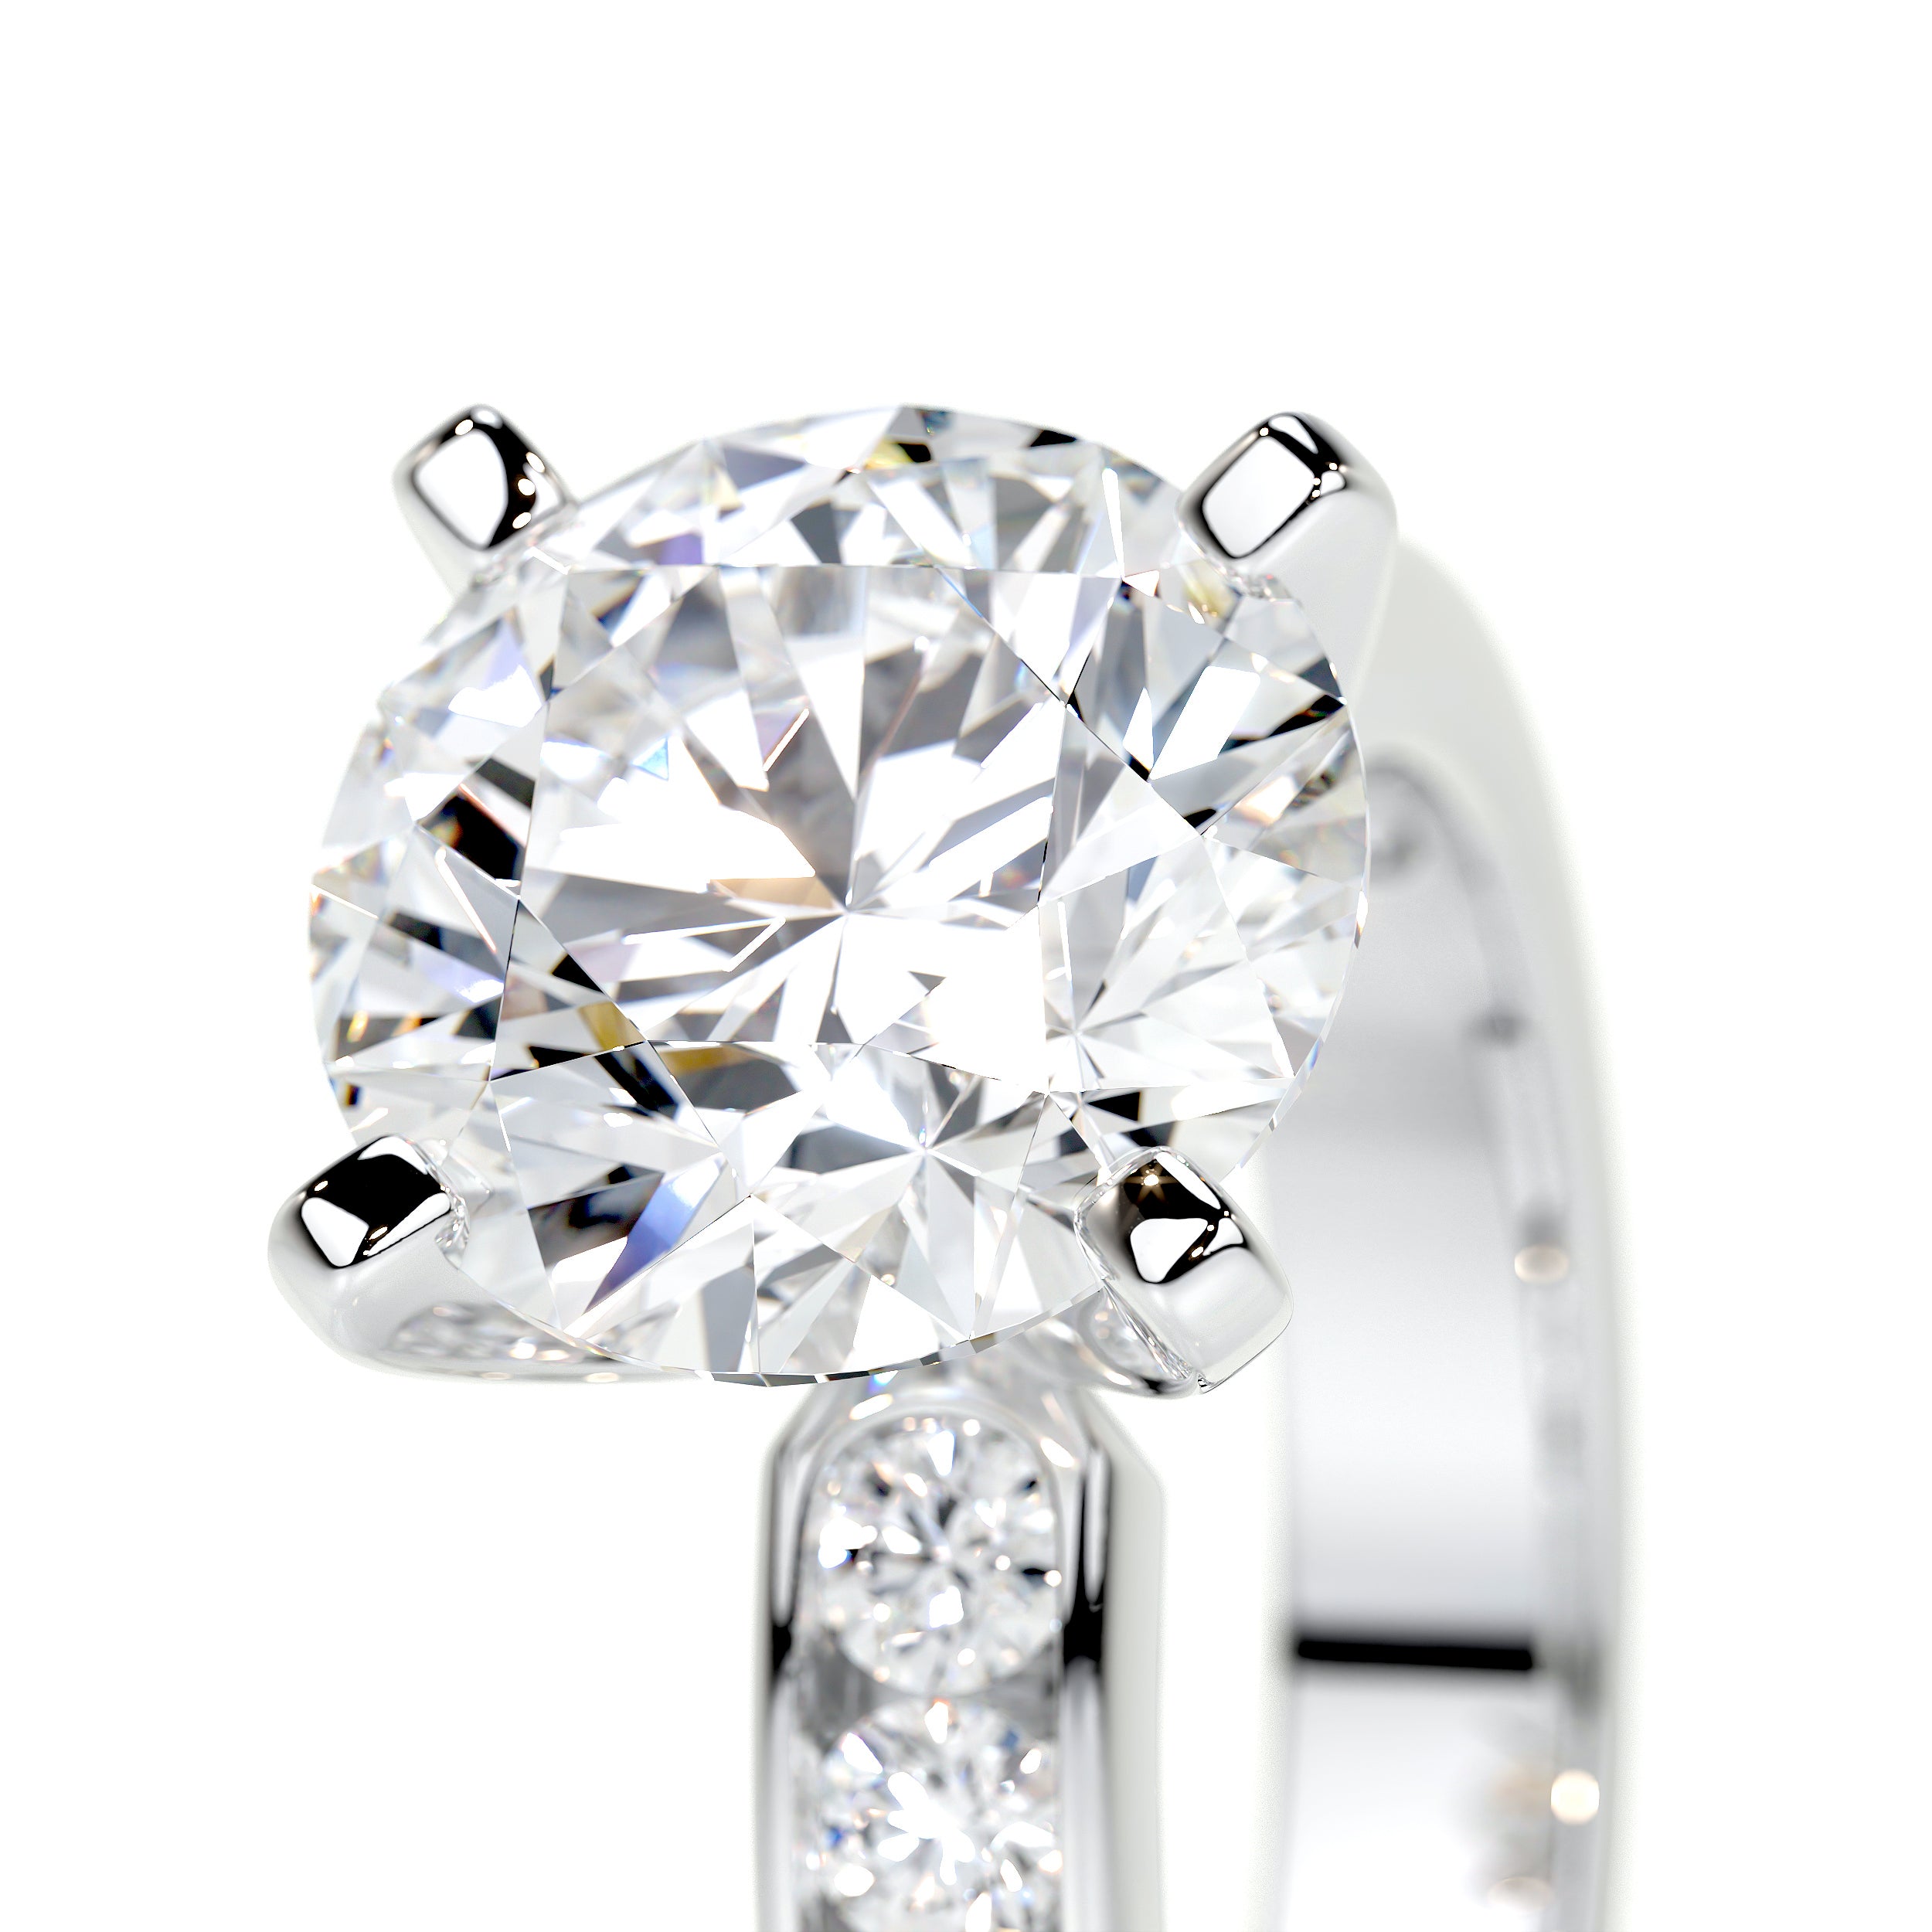 Giselle Lab Grown Diamond Ring   (3.50 Carat) -14K White Gold